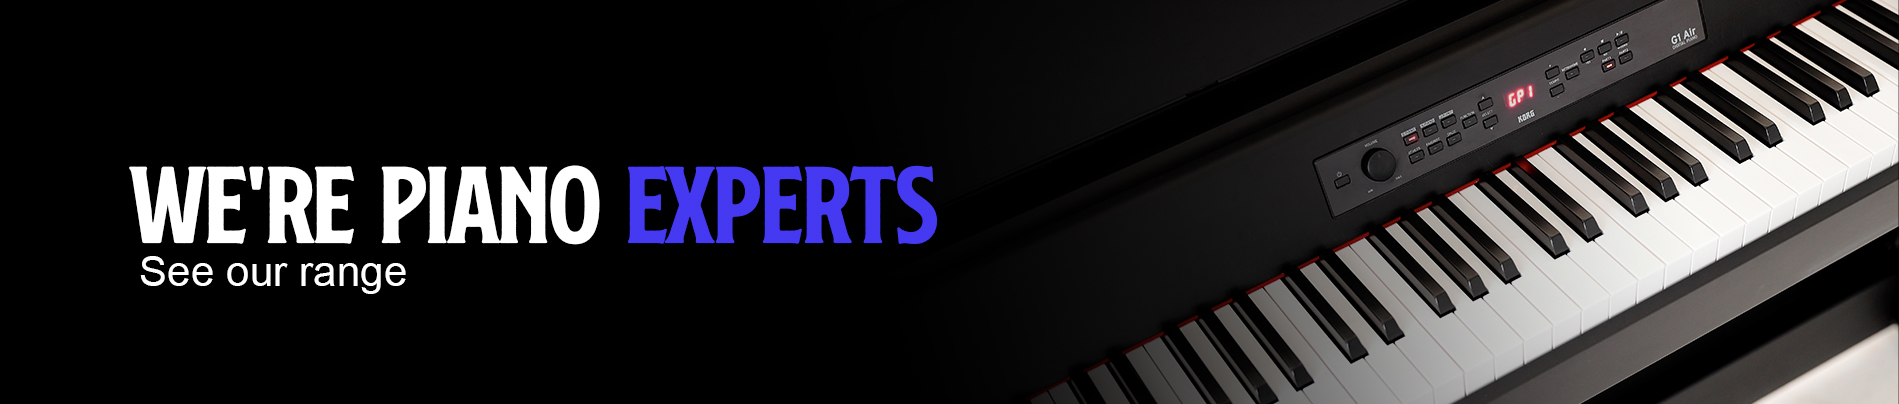 KEYBOARDS | PIANOS